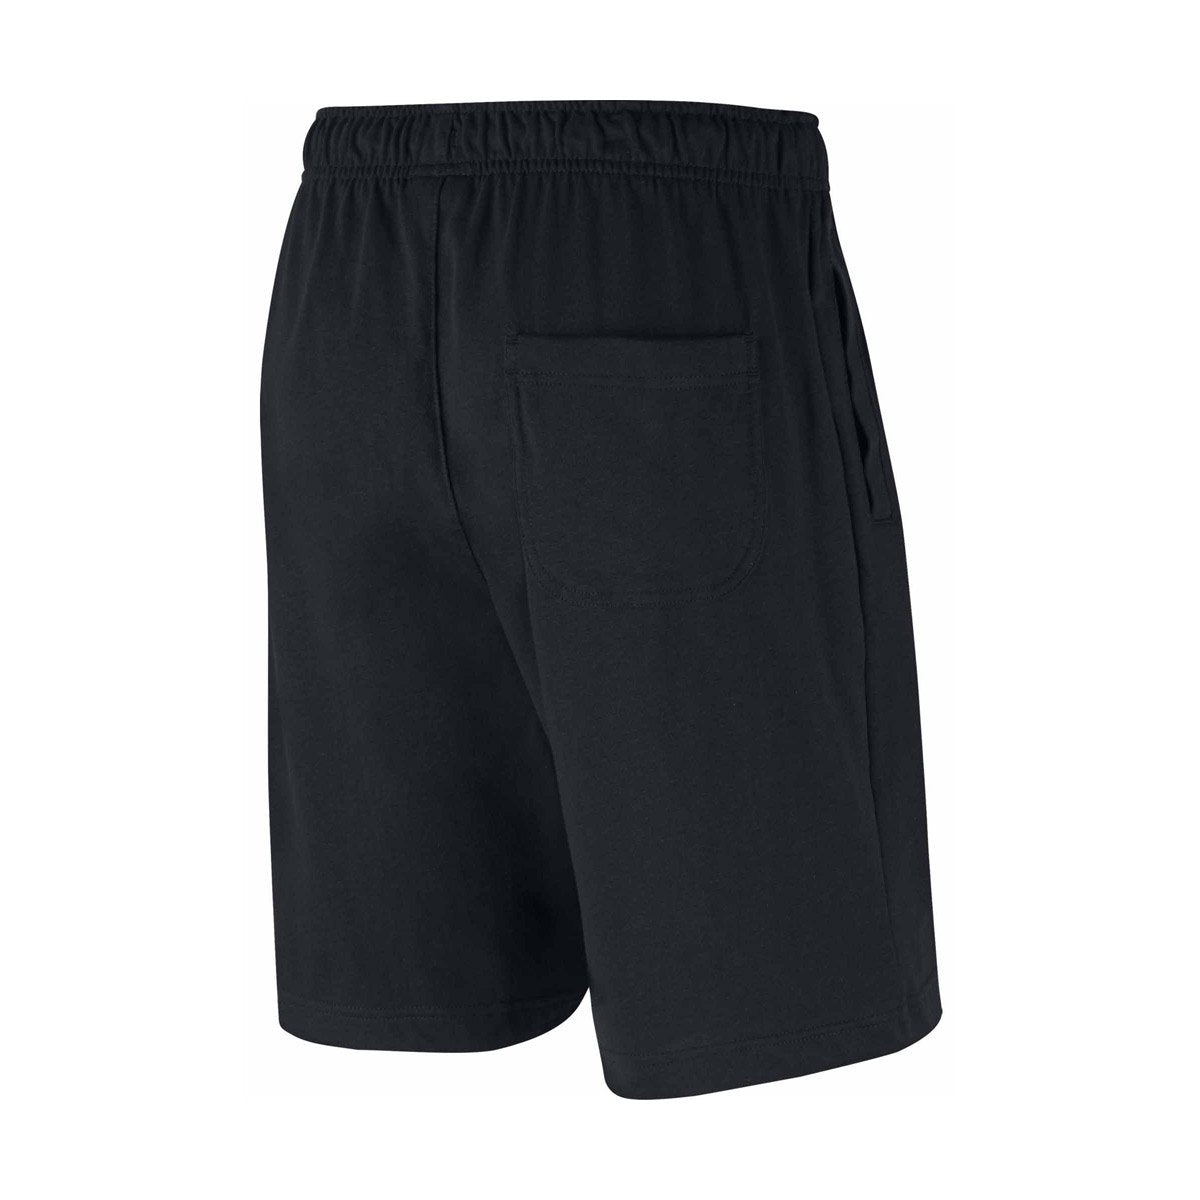 lebron 10 cheap white Men's Shorts